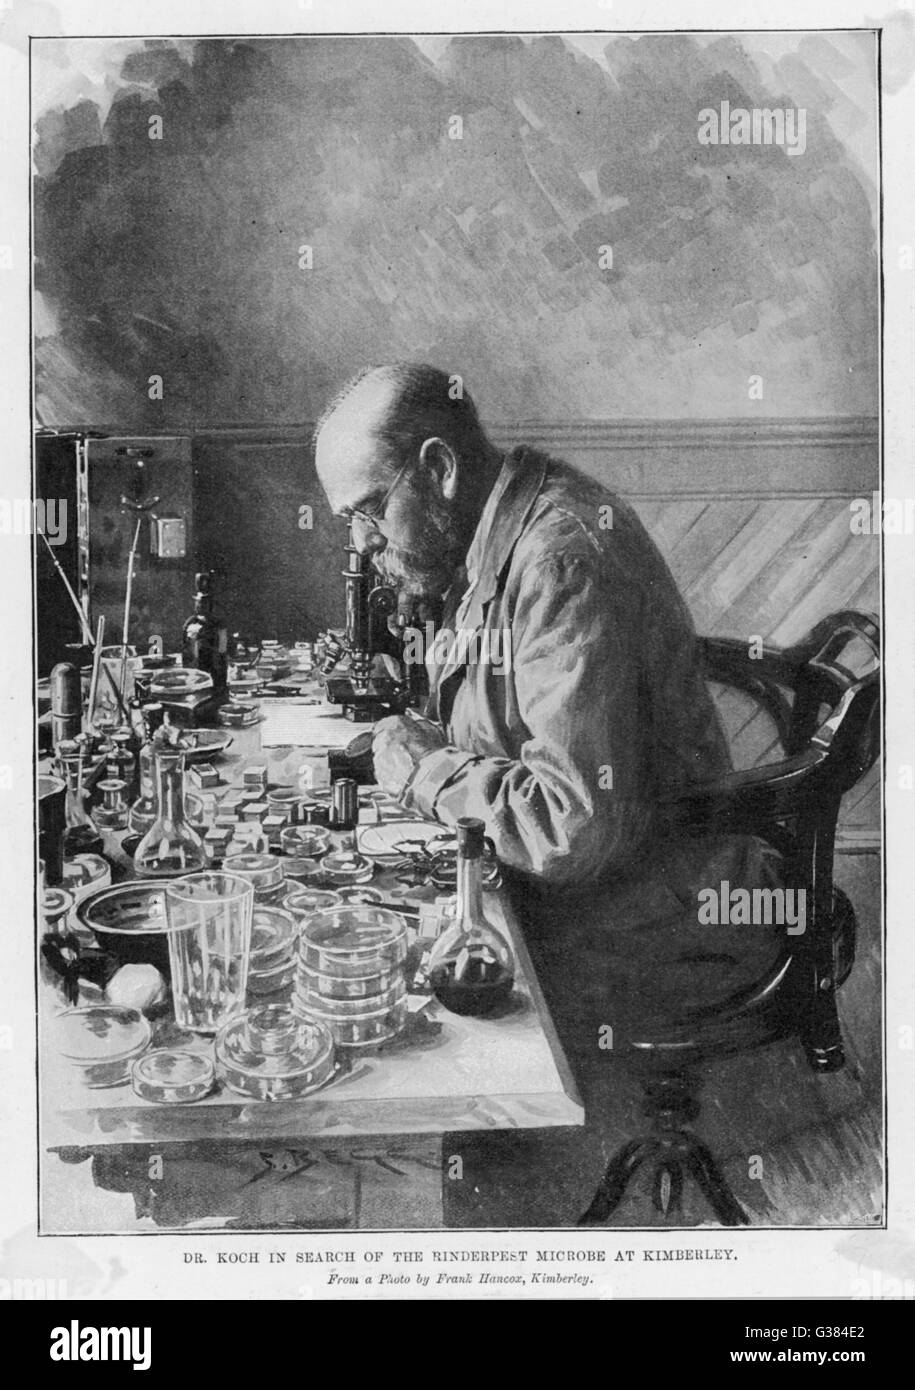 HEINRICH HERMANN ROBERT KOCH medico tedesco e bacteriologist pioniere nella ricerca della peste bovina microbo a Kimberley data: 1843 - 1910 Foto Stock